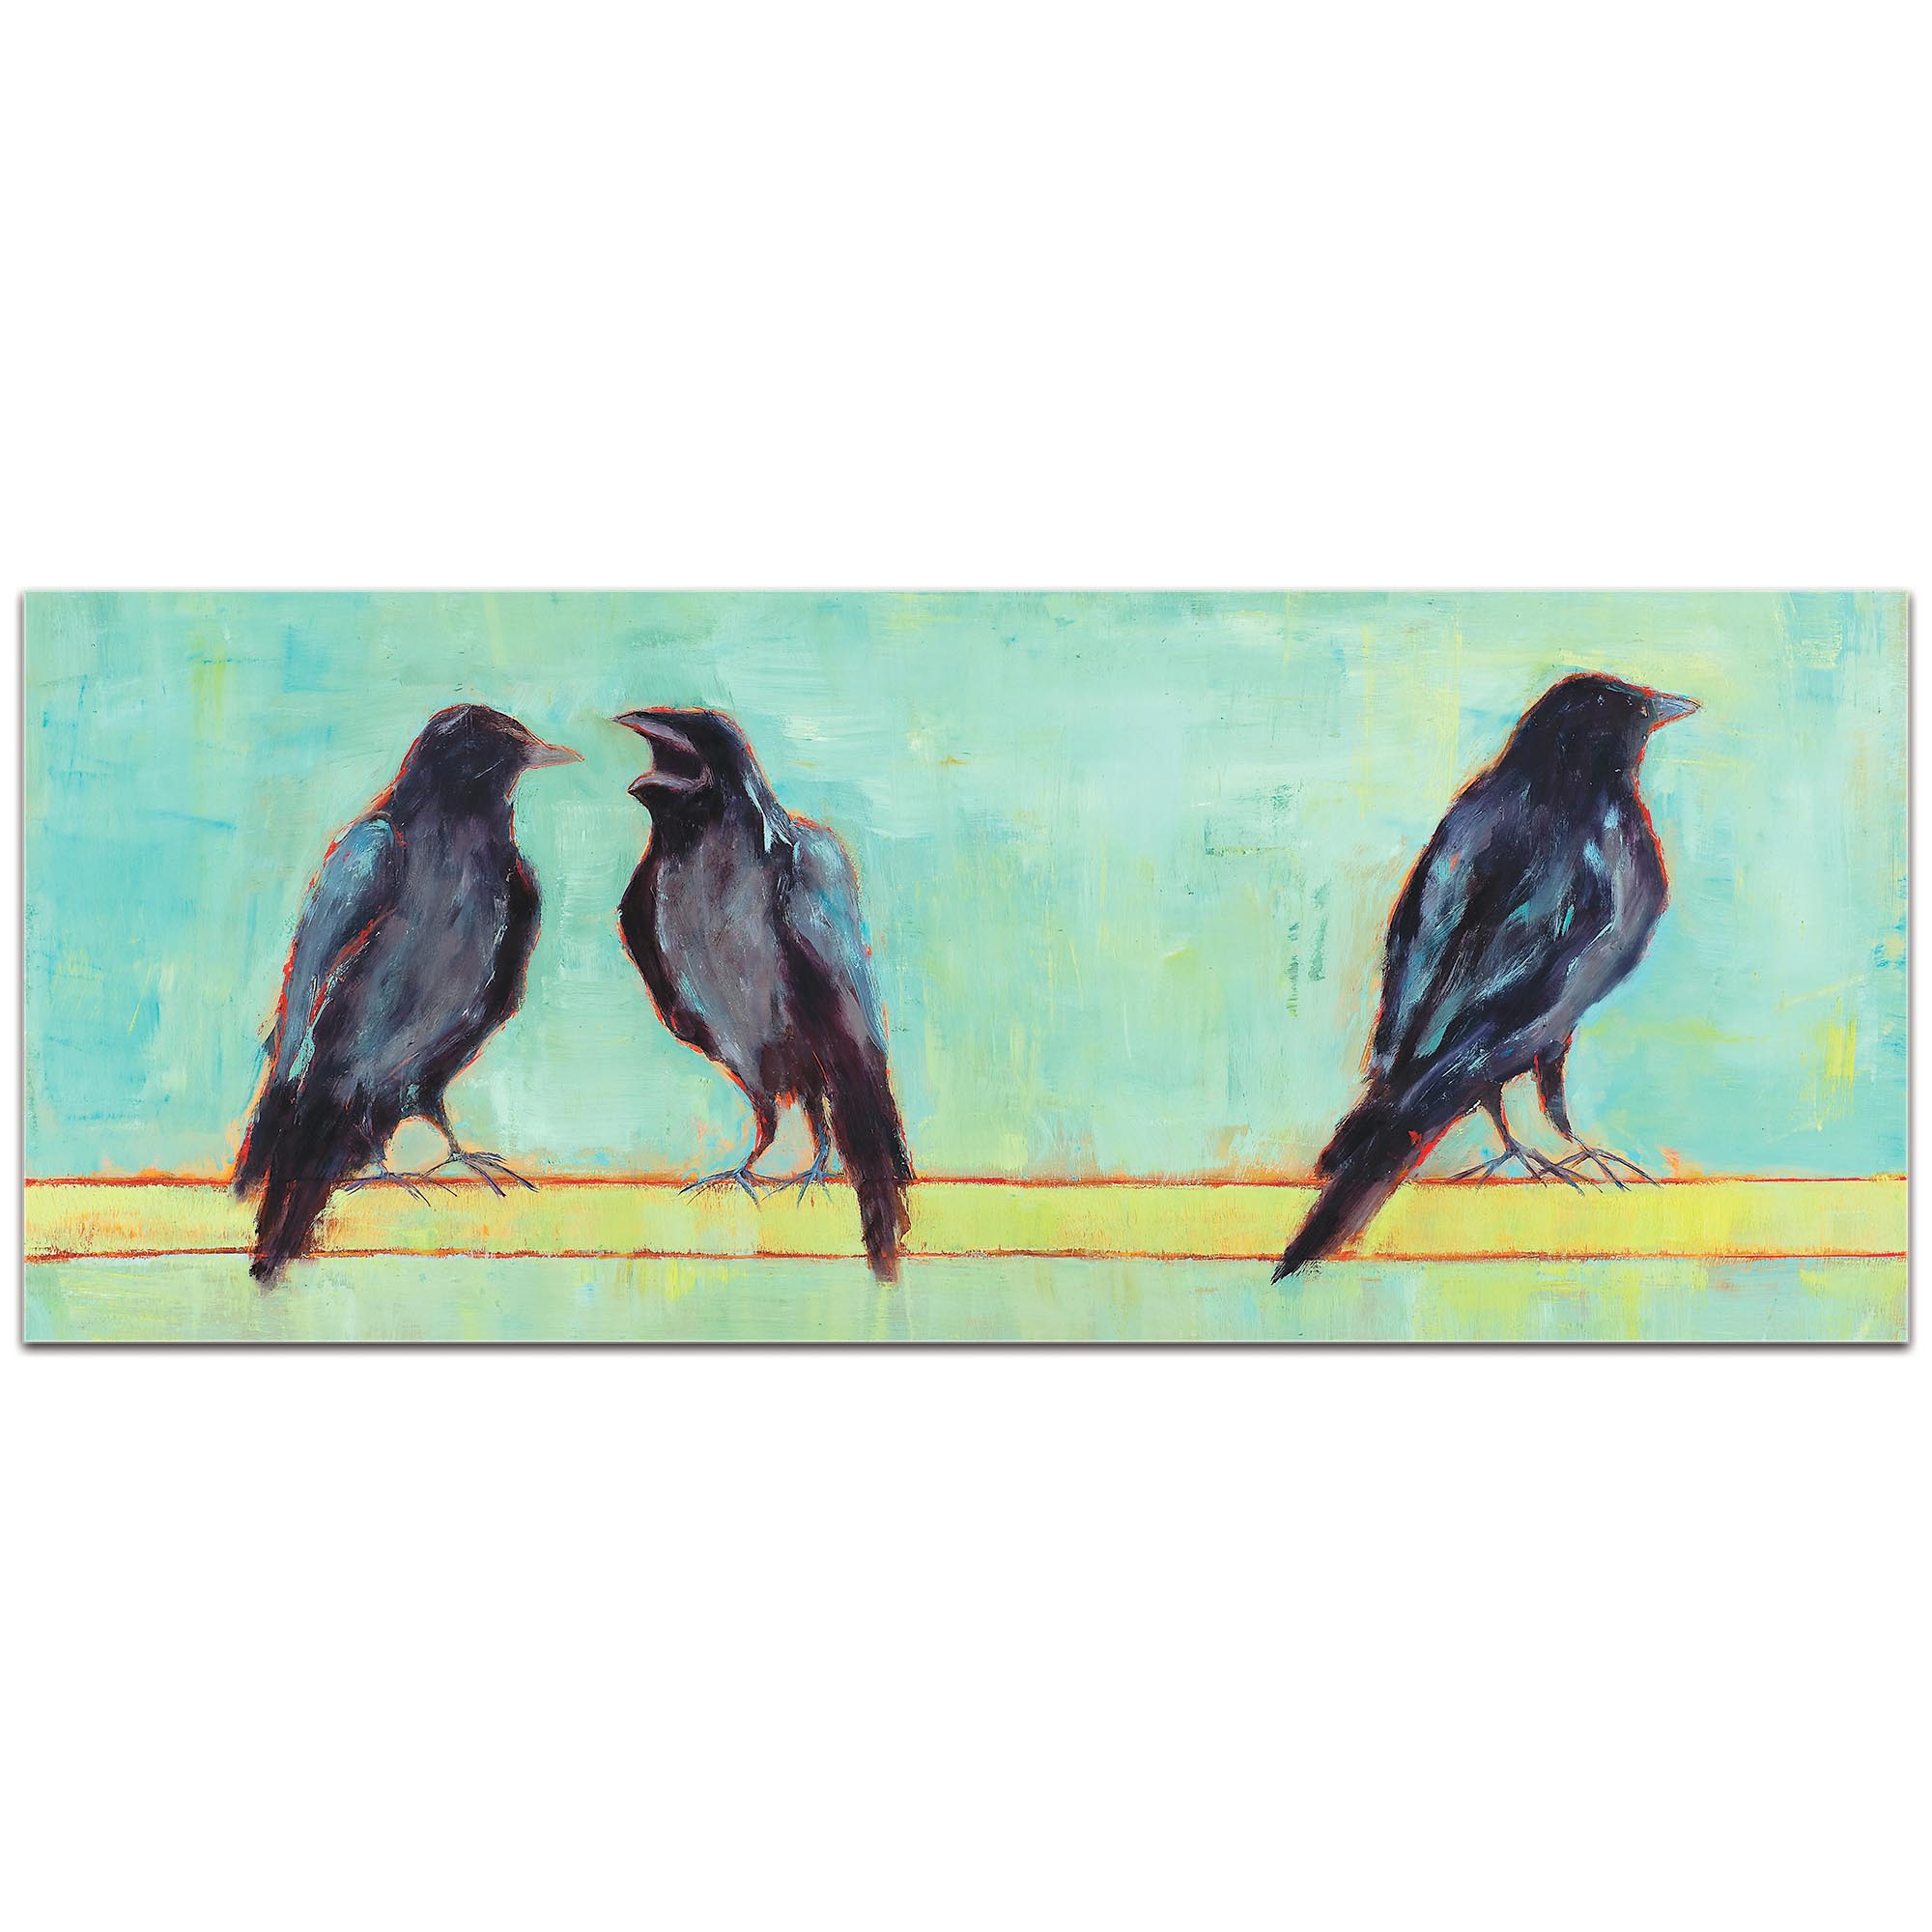 Contemporary Wall Art 'Crow Bar 2 v2' - Urban Birds Decor on Metal or Plexiglass - Image 2